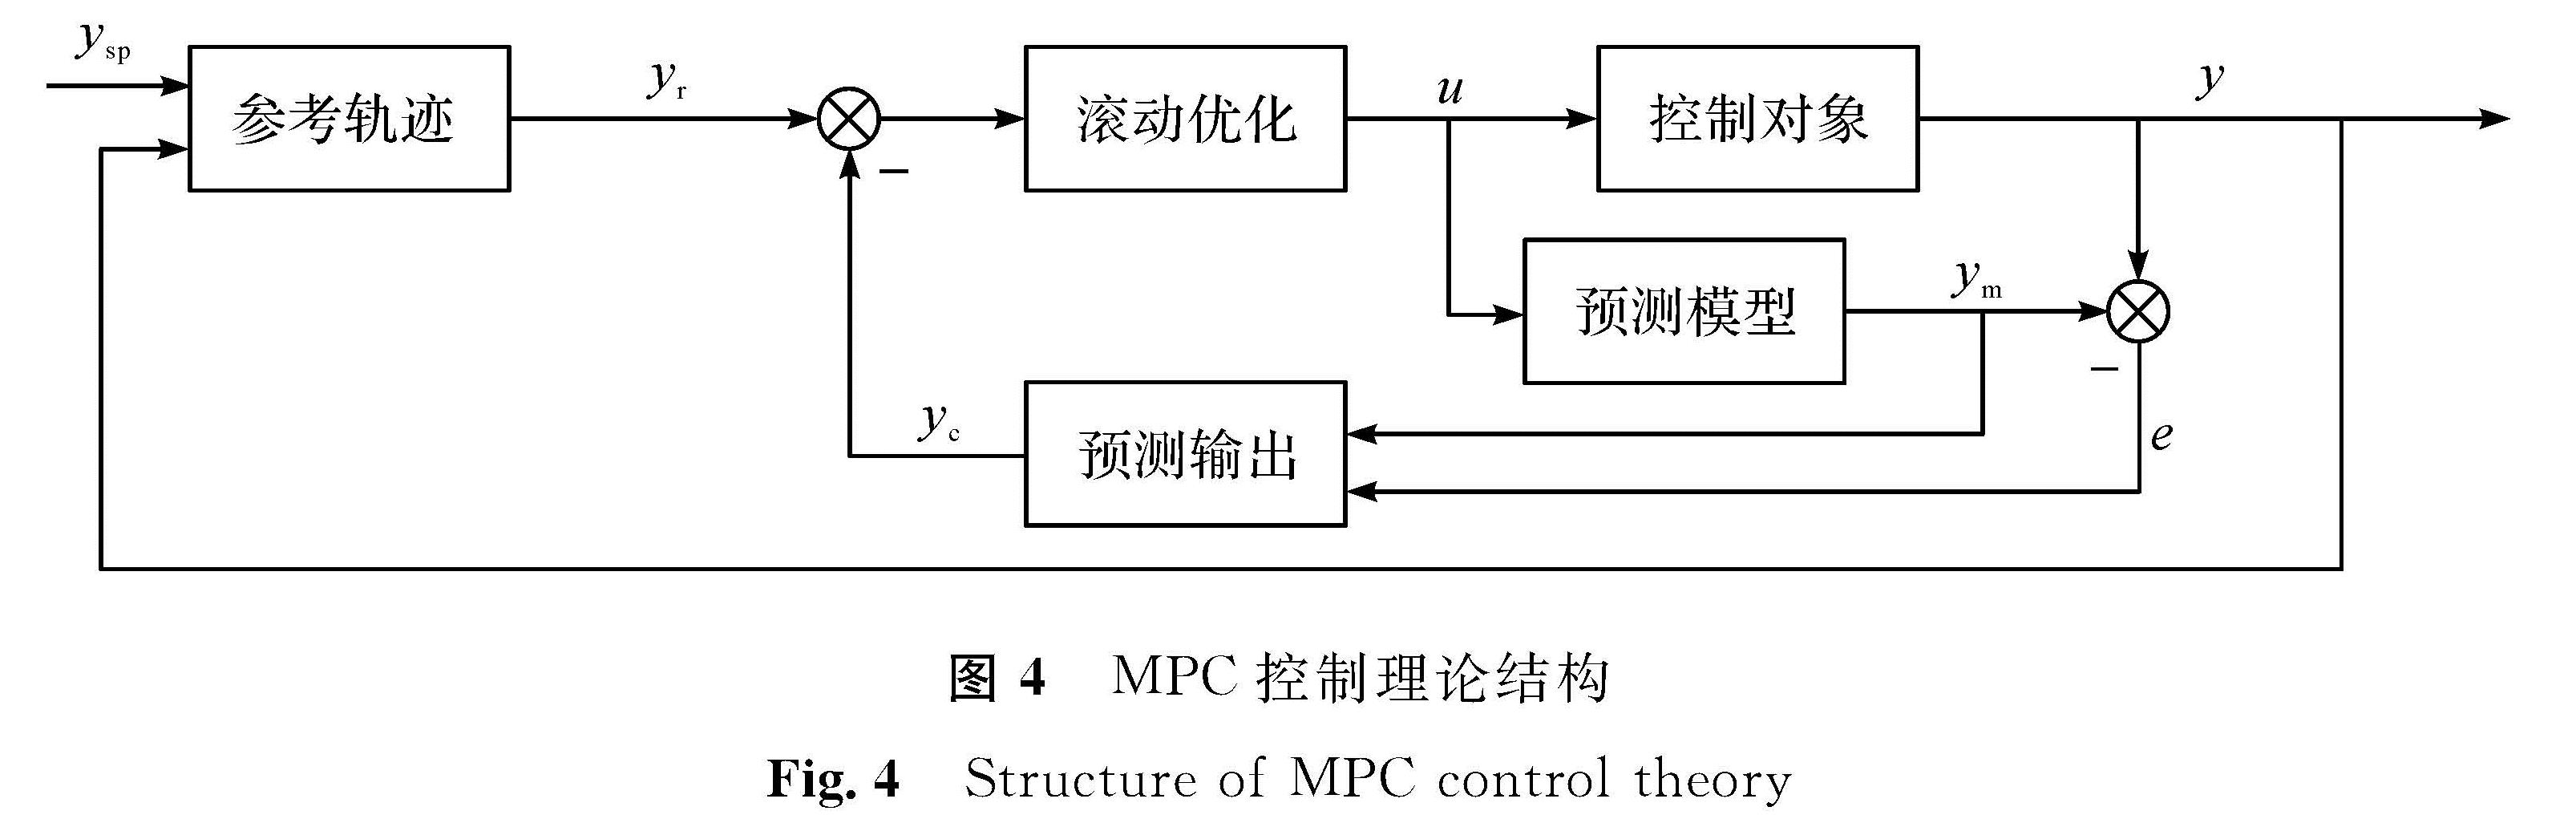 图4 MPC控制理论结构<br/>Fig.4 Structure of MPC control theory